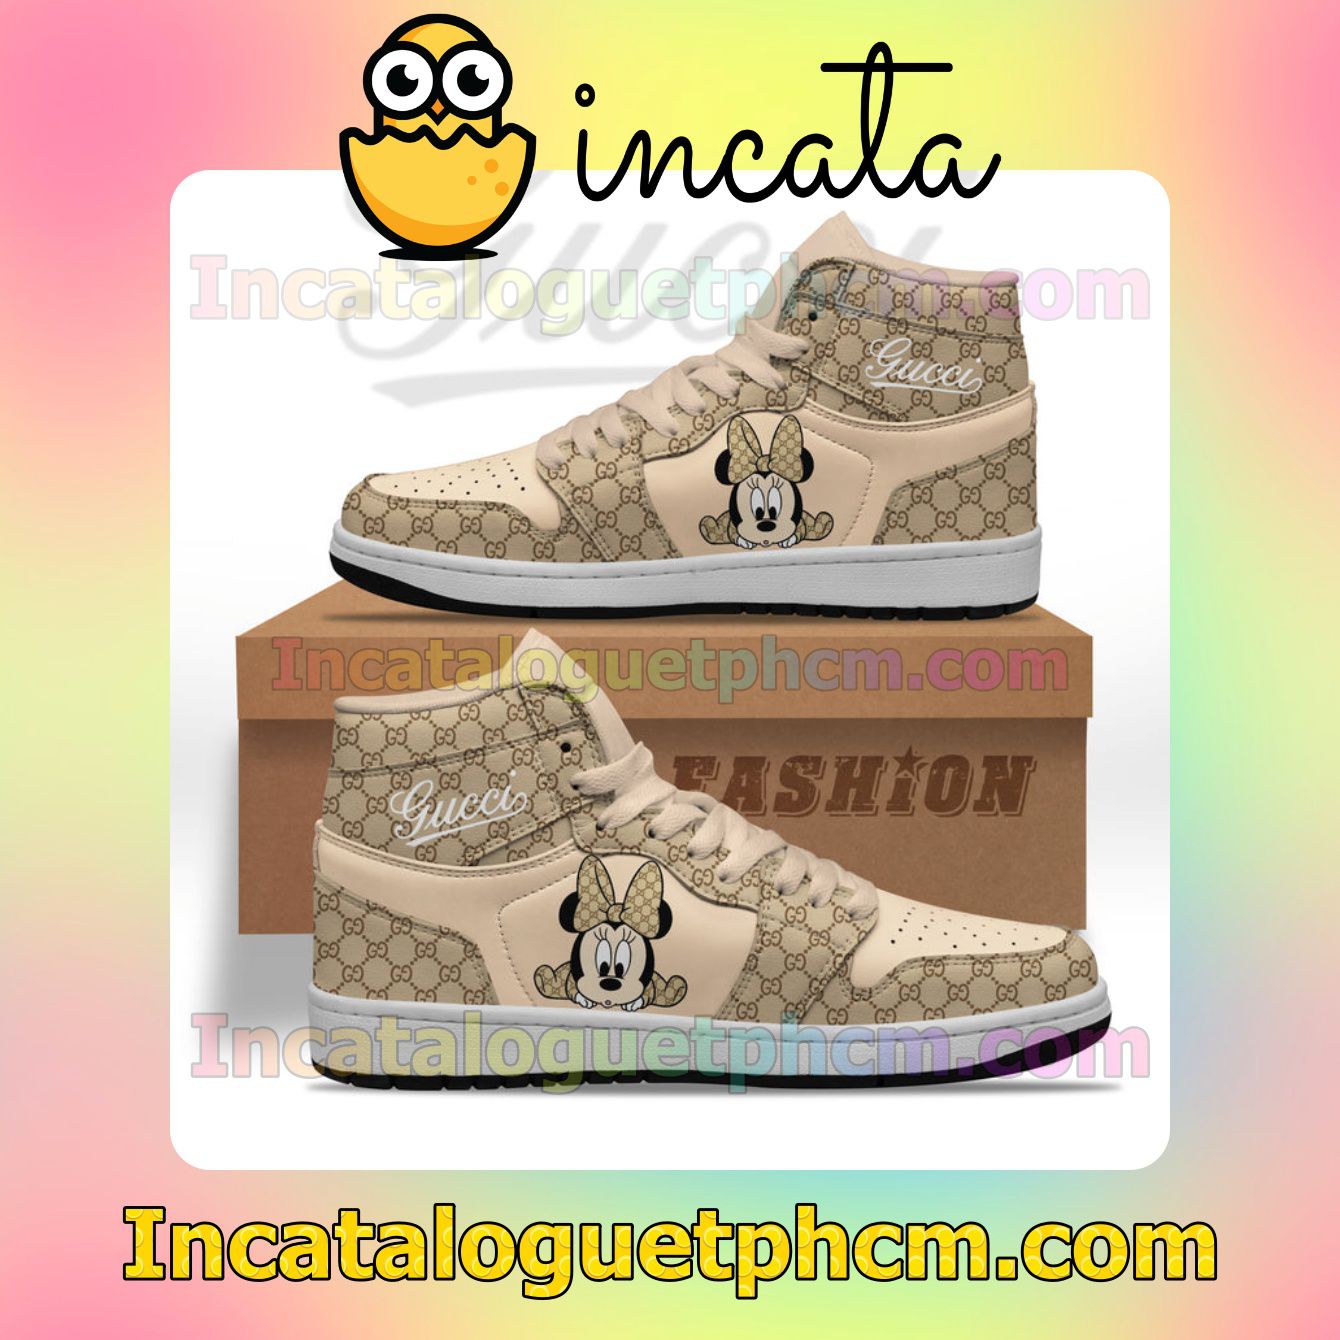 Gucci x MickeyDisney Air Jordan 1 Inspired Shoes